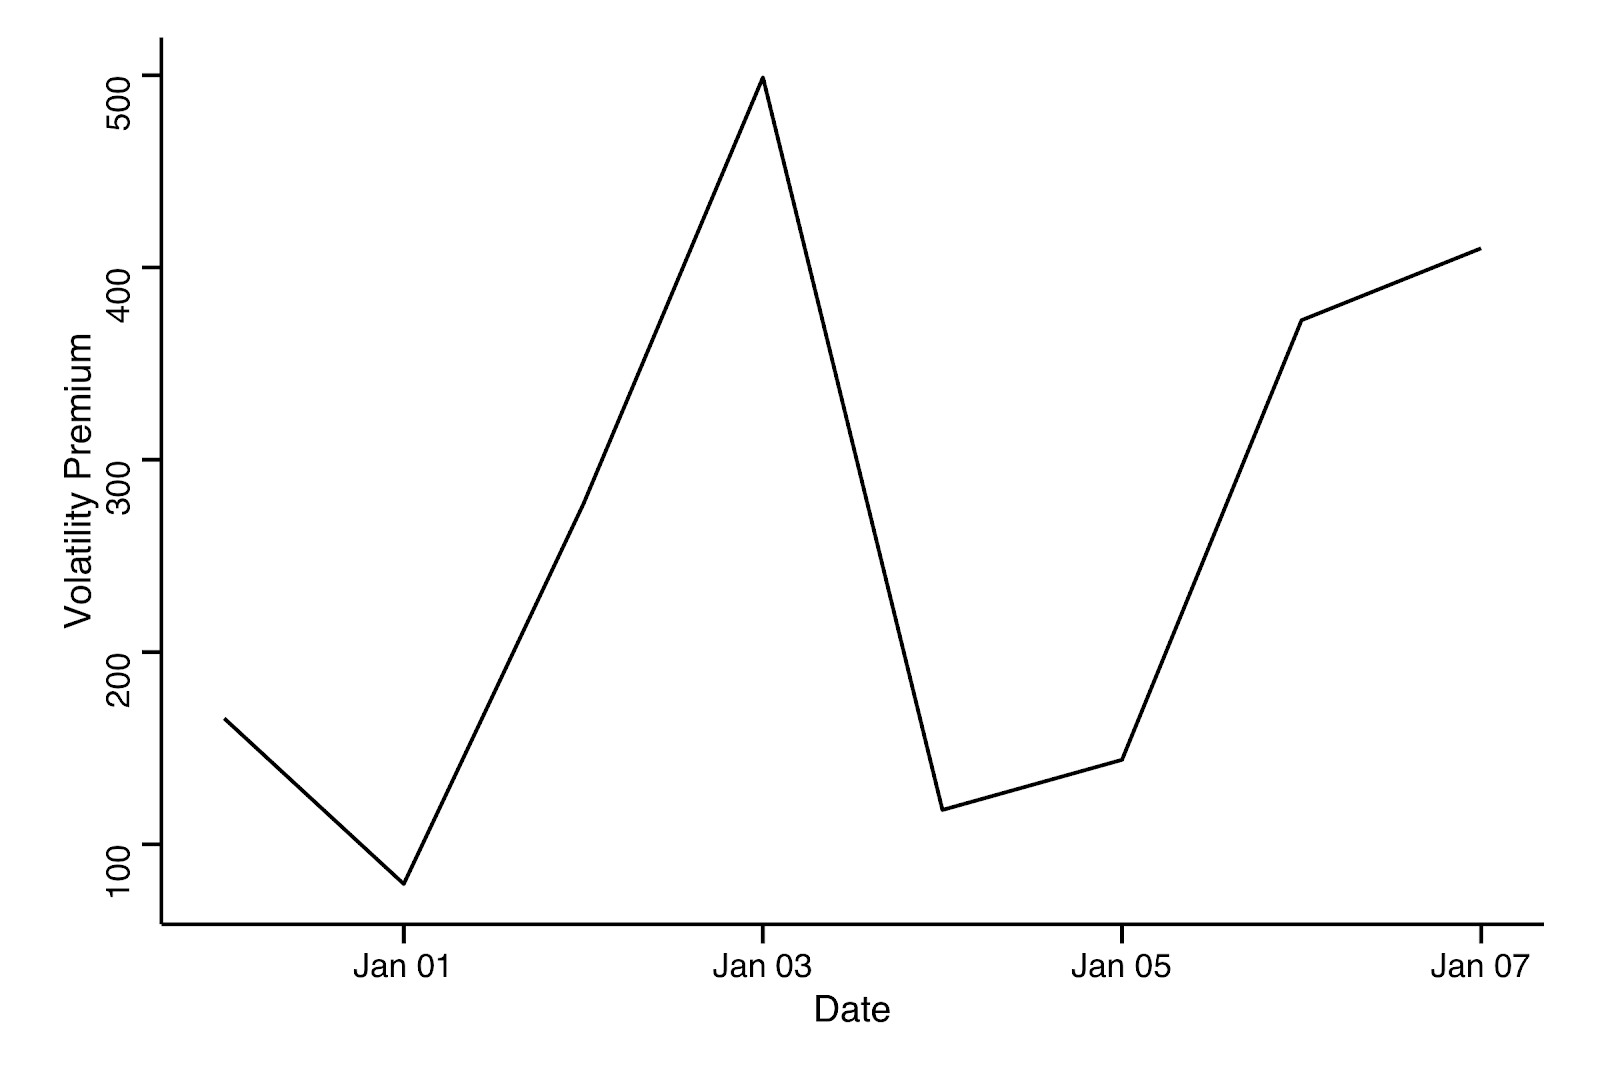 Figure 4: Bitcoin’s Volatility Premium in the last 7 days. Data source: Coinmarketcap